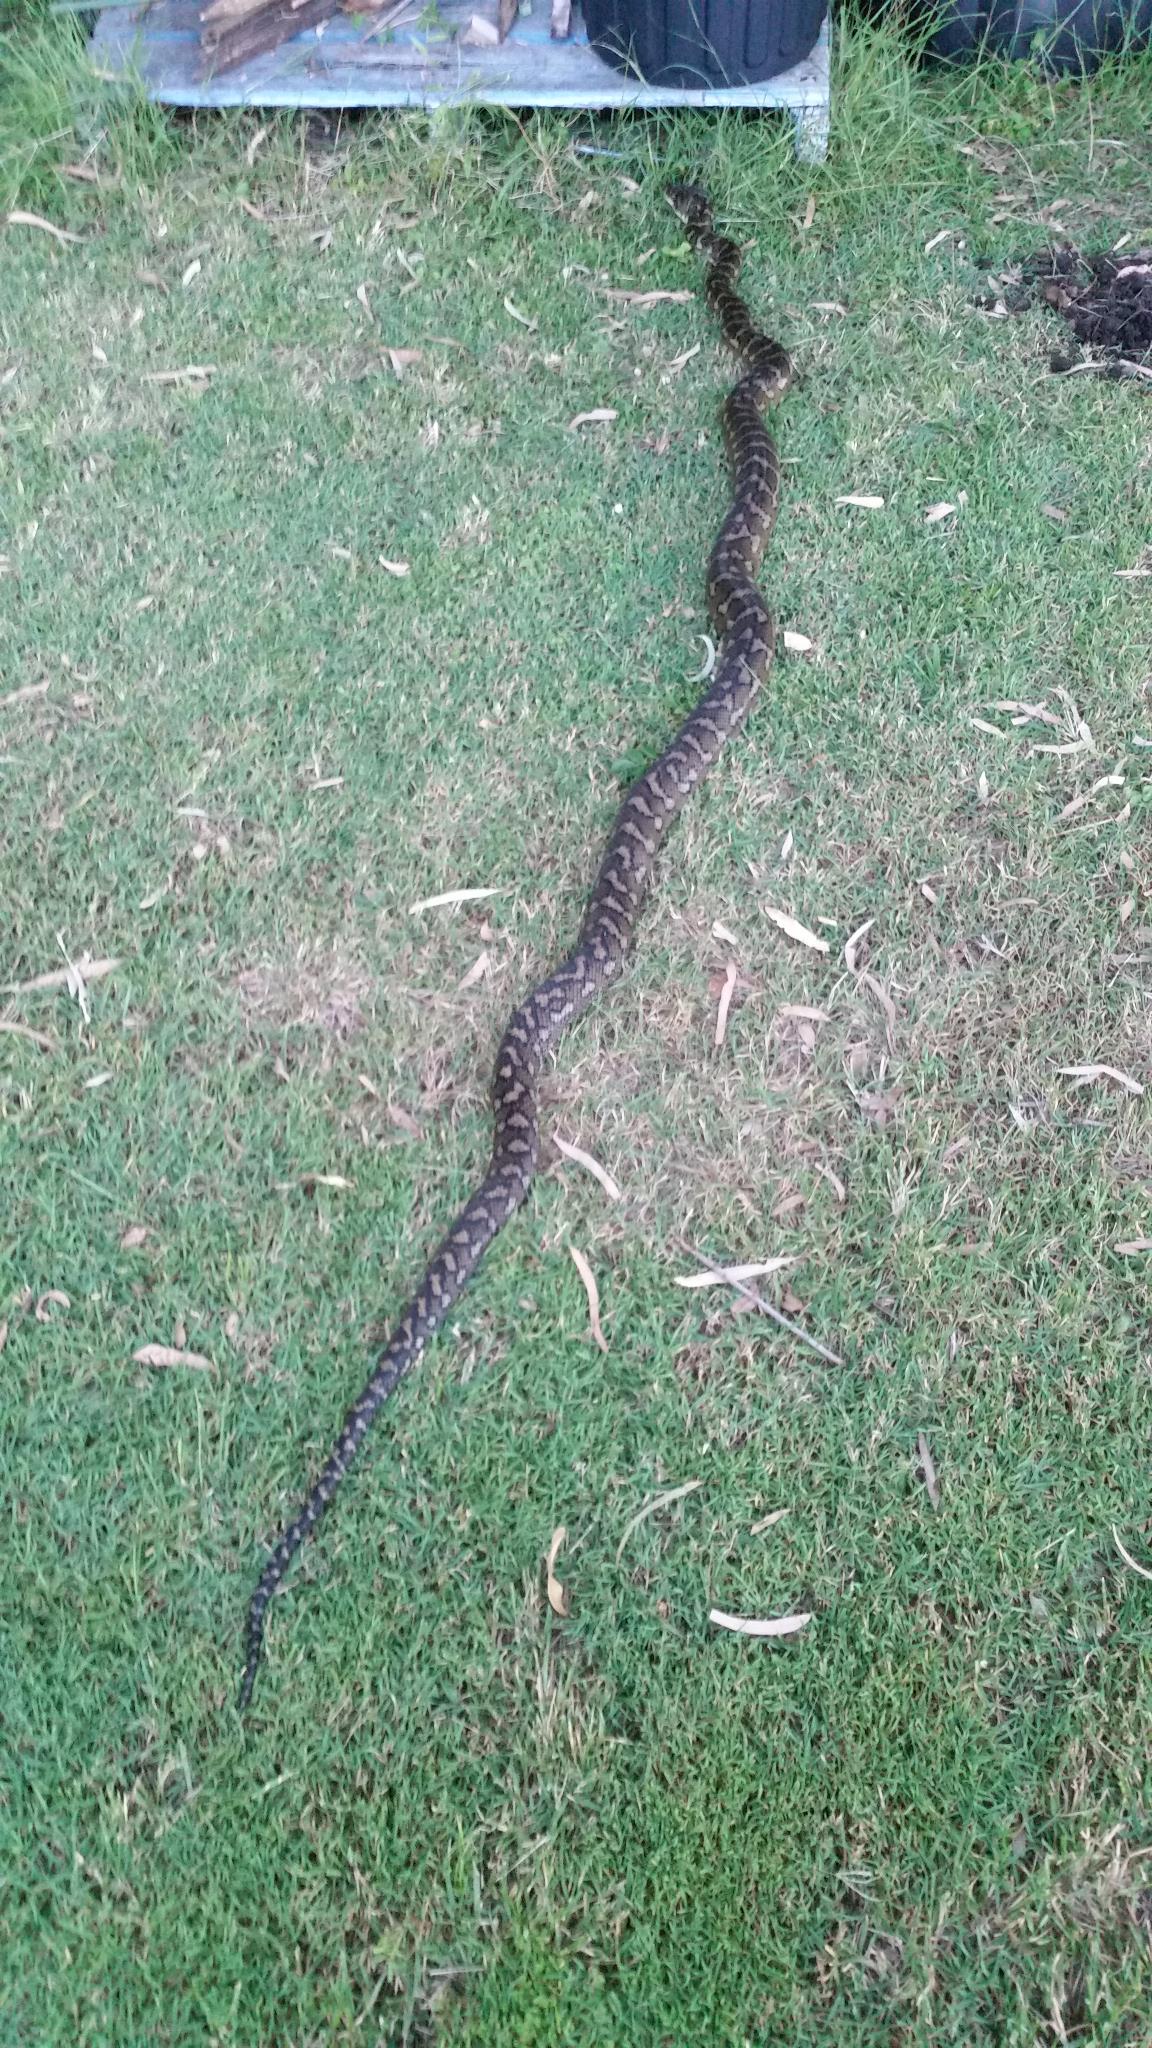 Adult Coastal Python/Carpet Snake